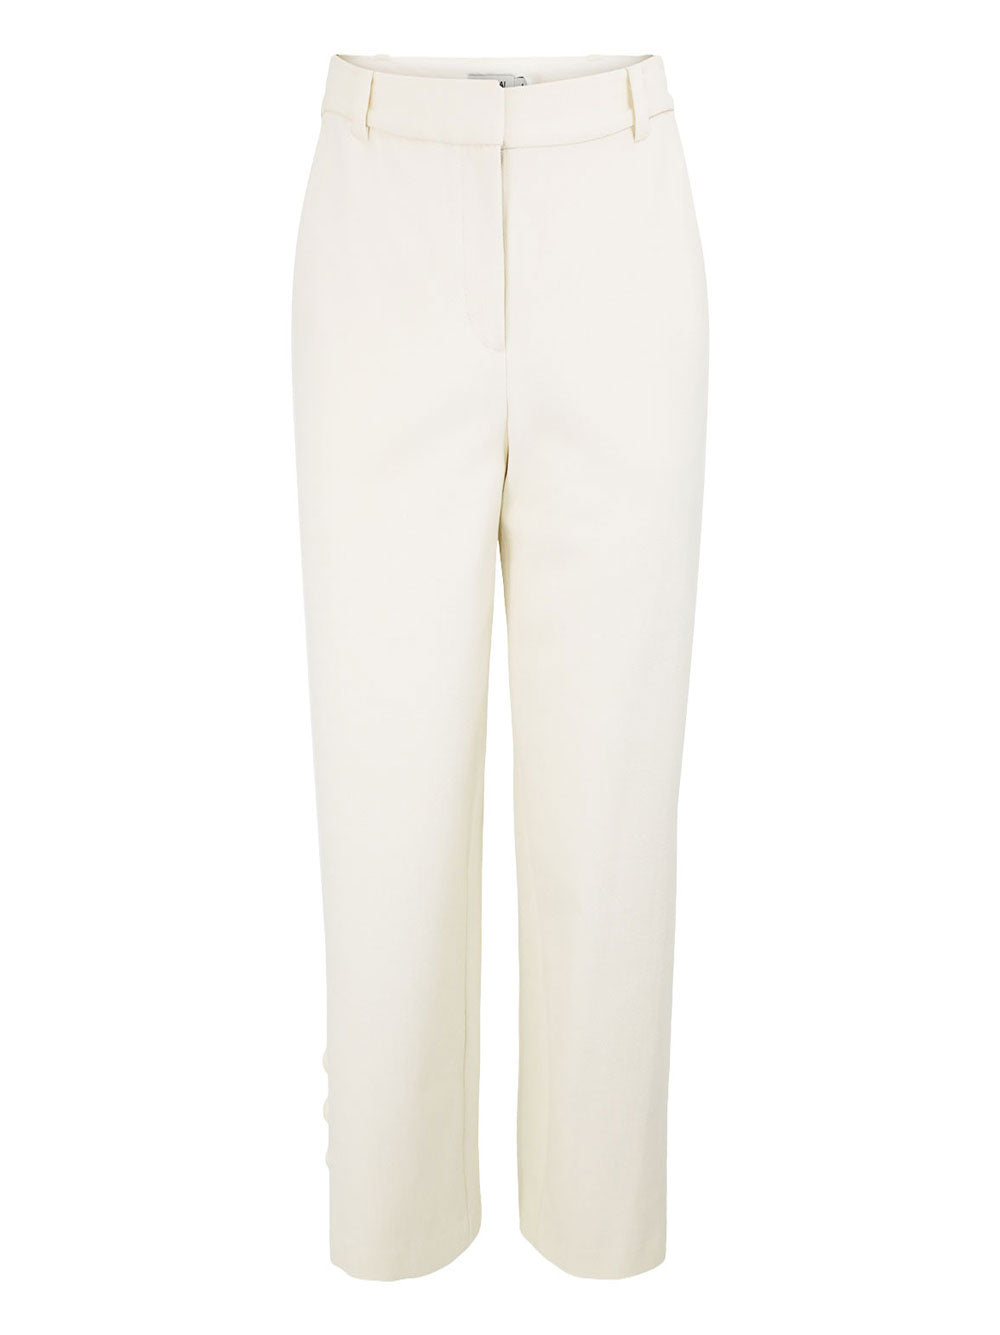 Simkhai Miki Cropped Button Hem Pants in White